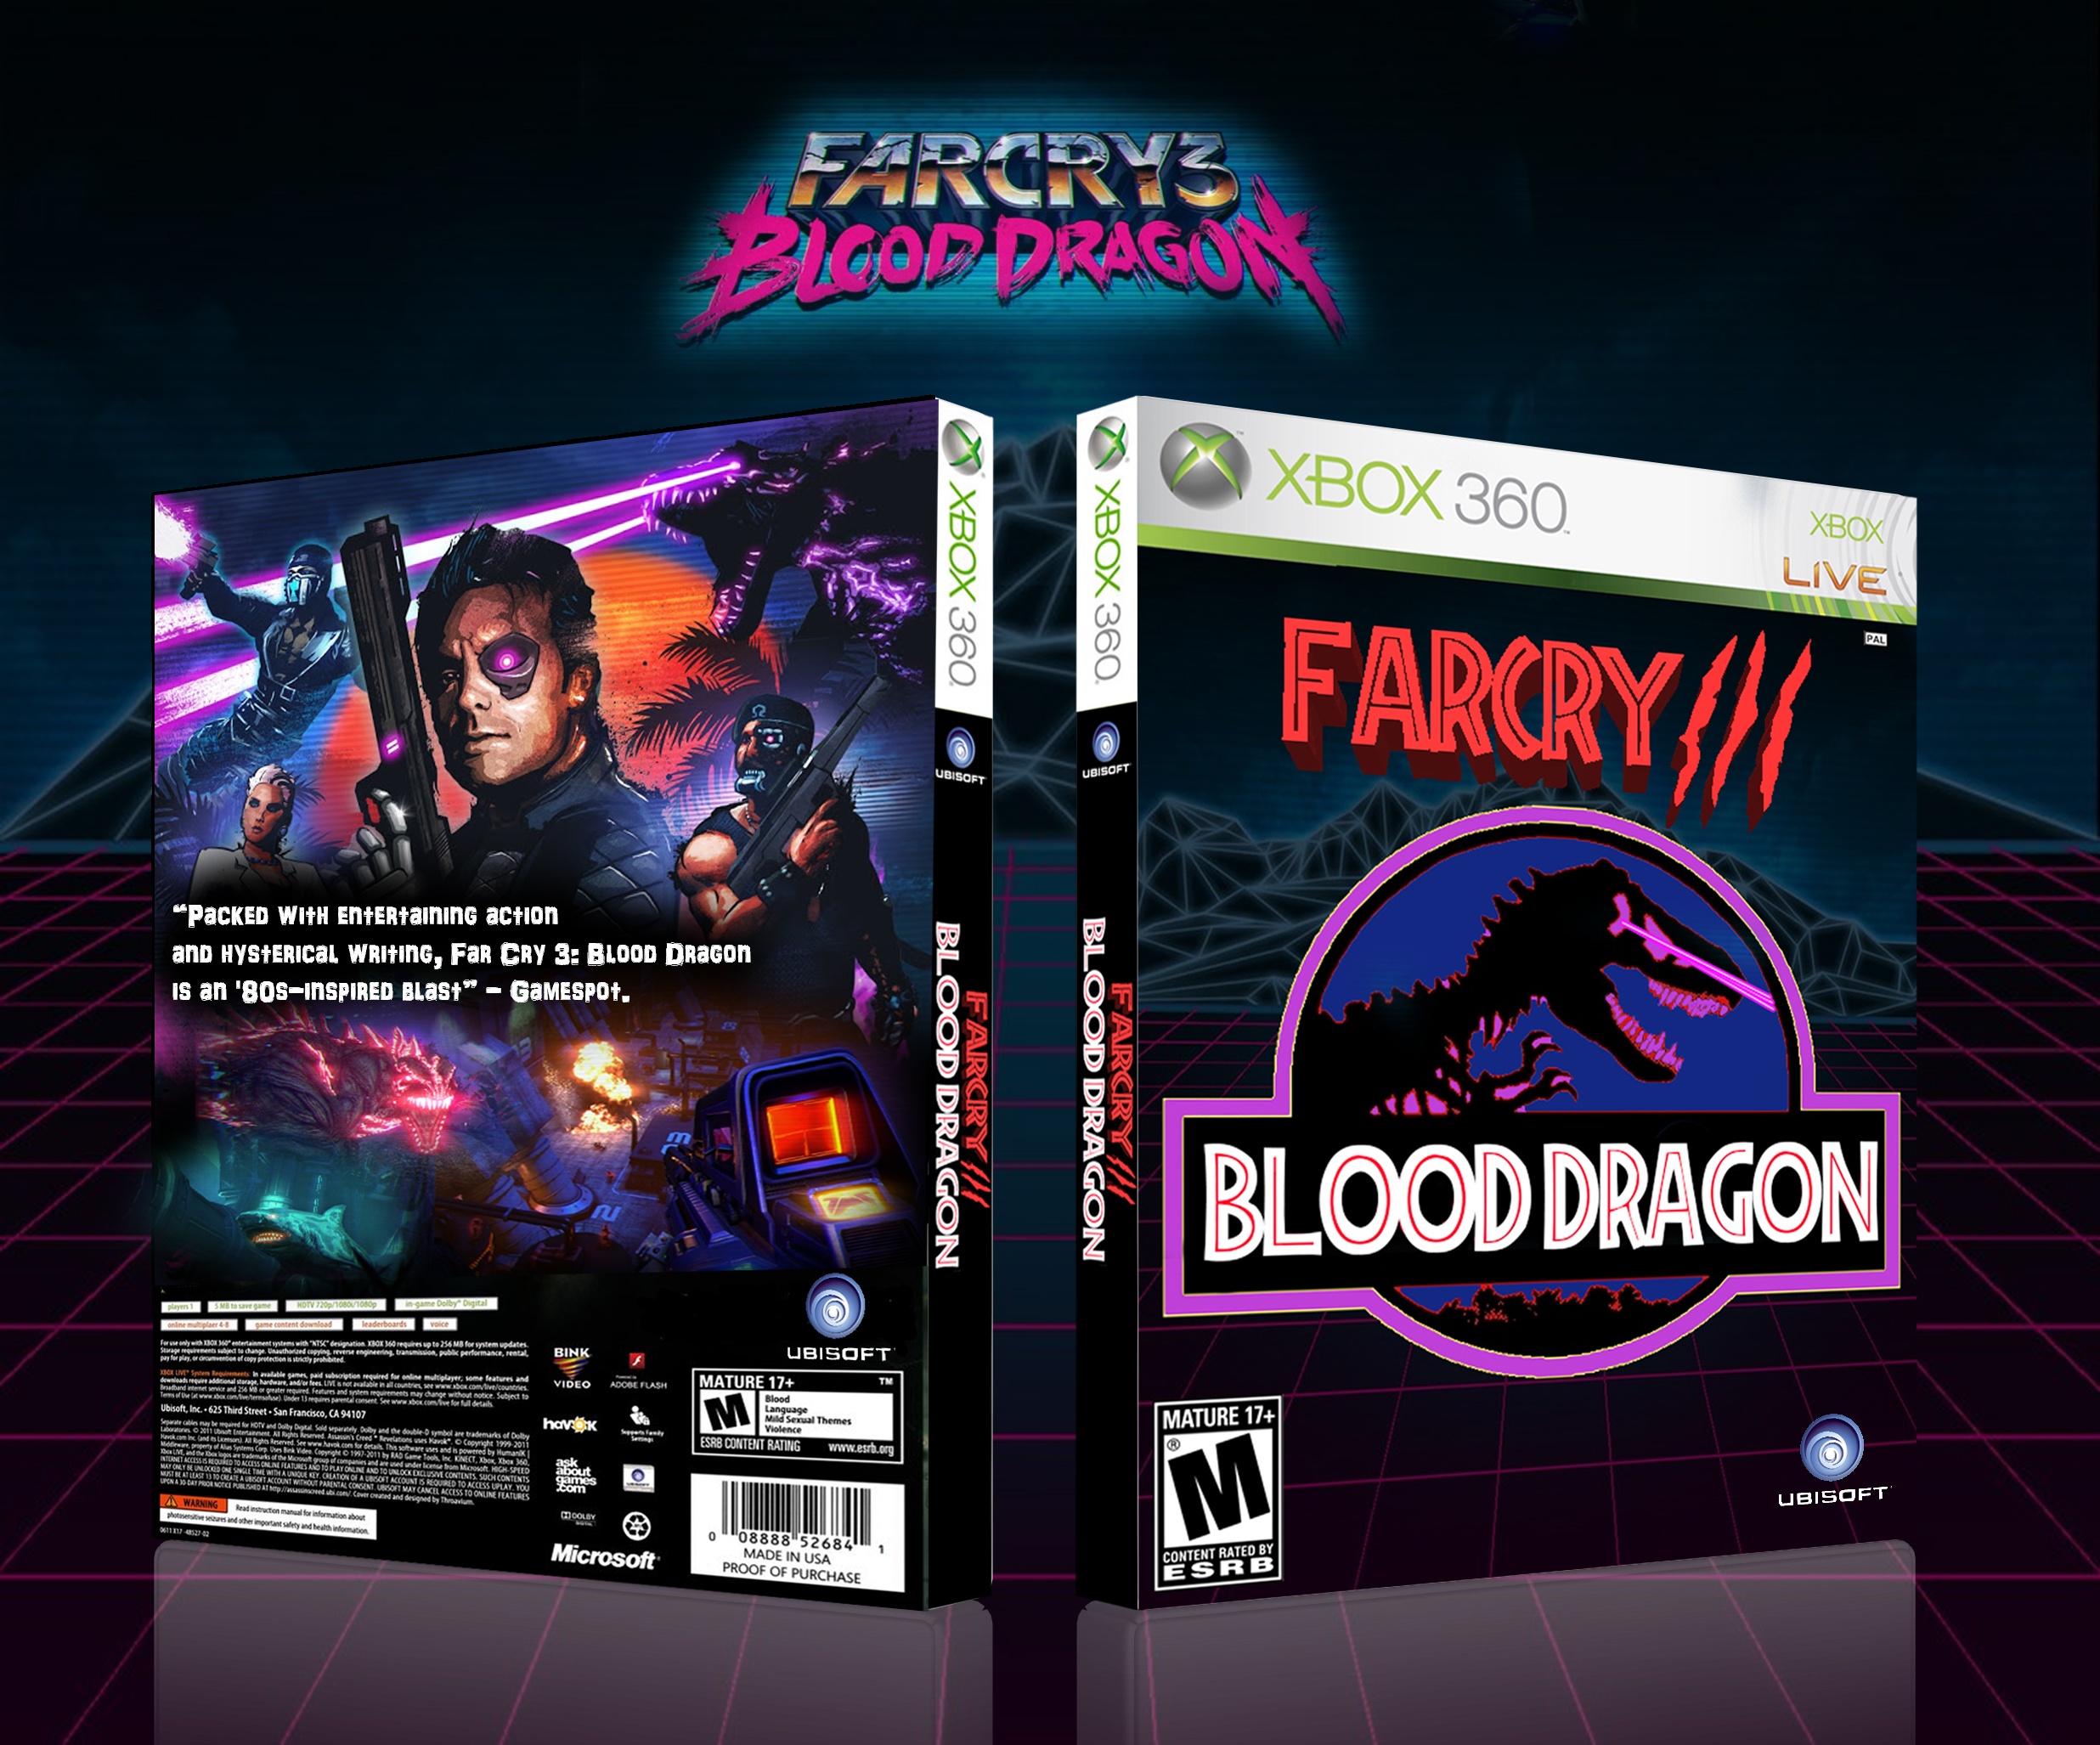 Farcry 3 Blood Dragon box cover